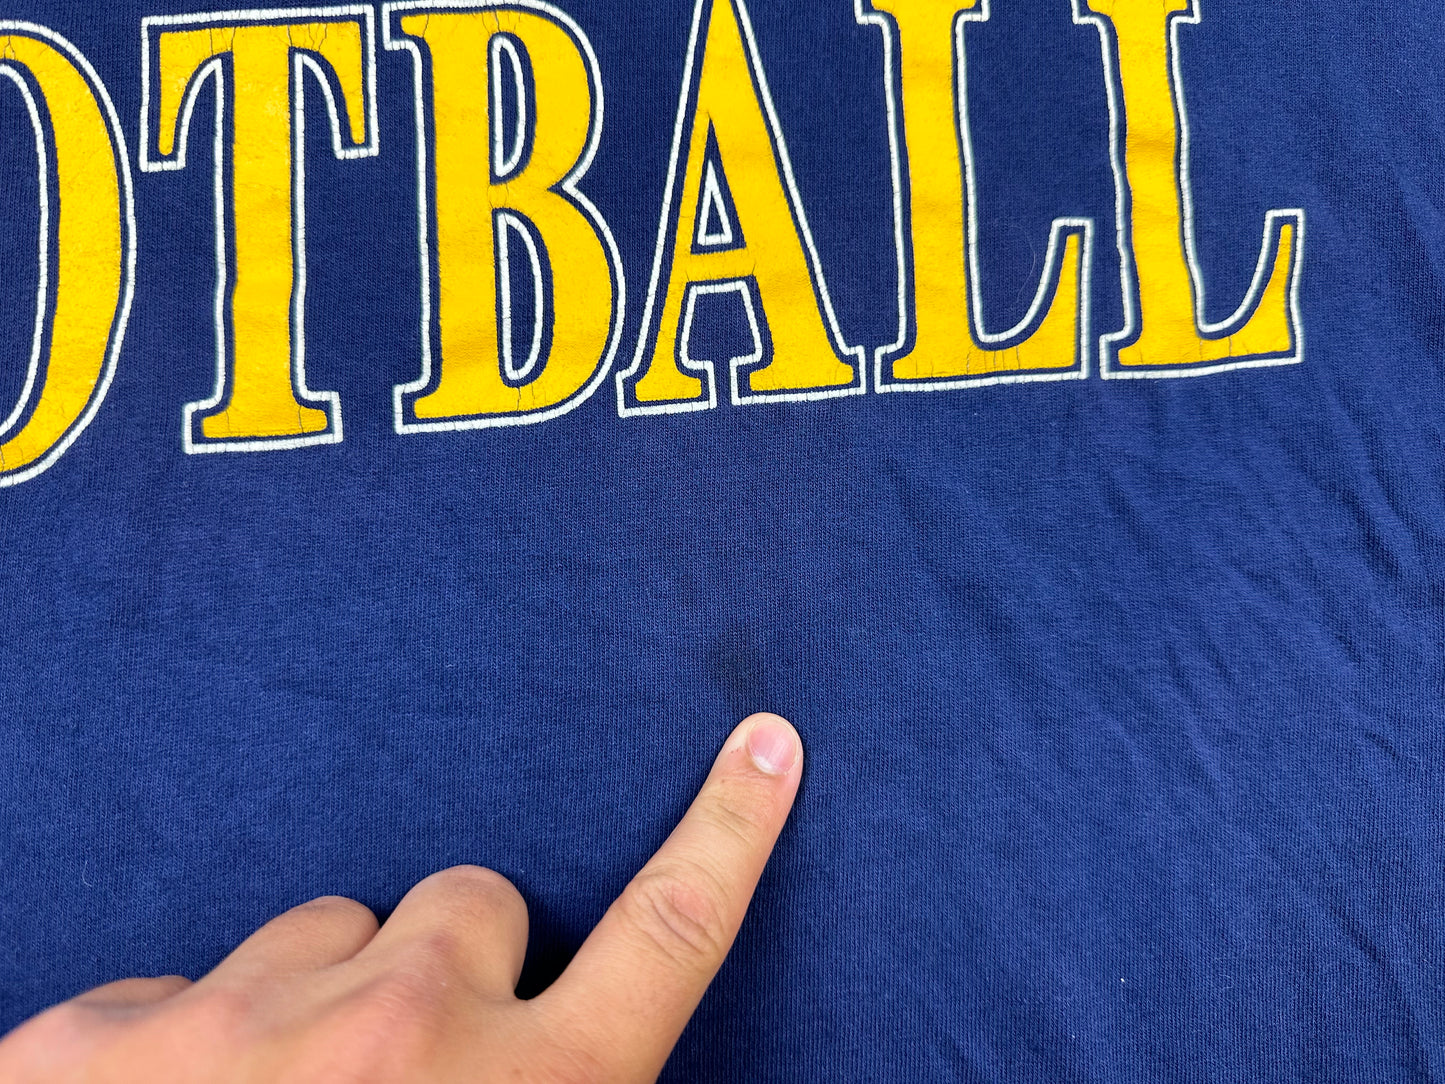 Michigan Football T-Shirt